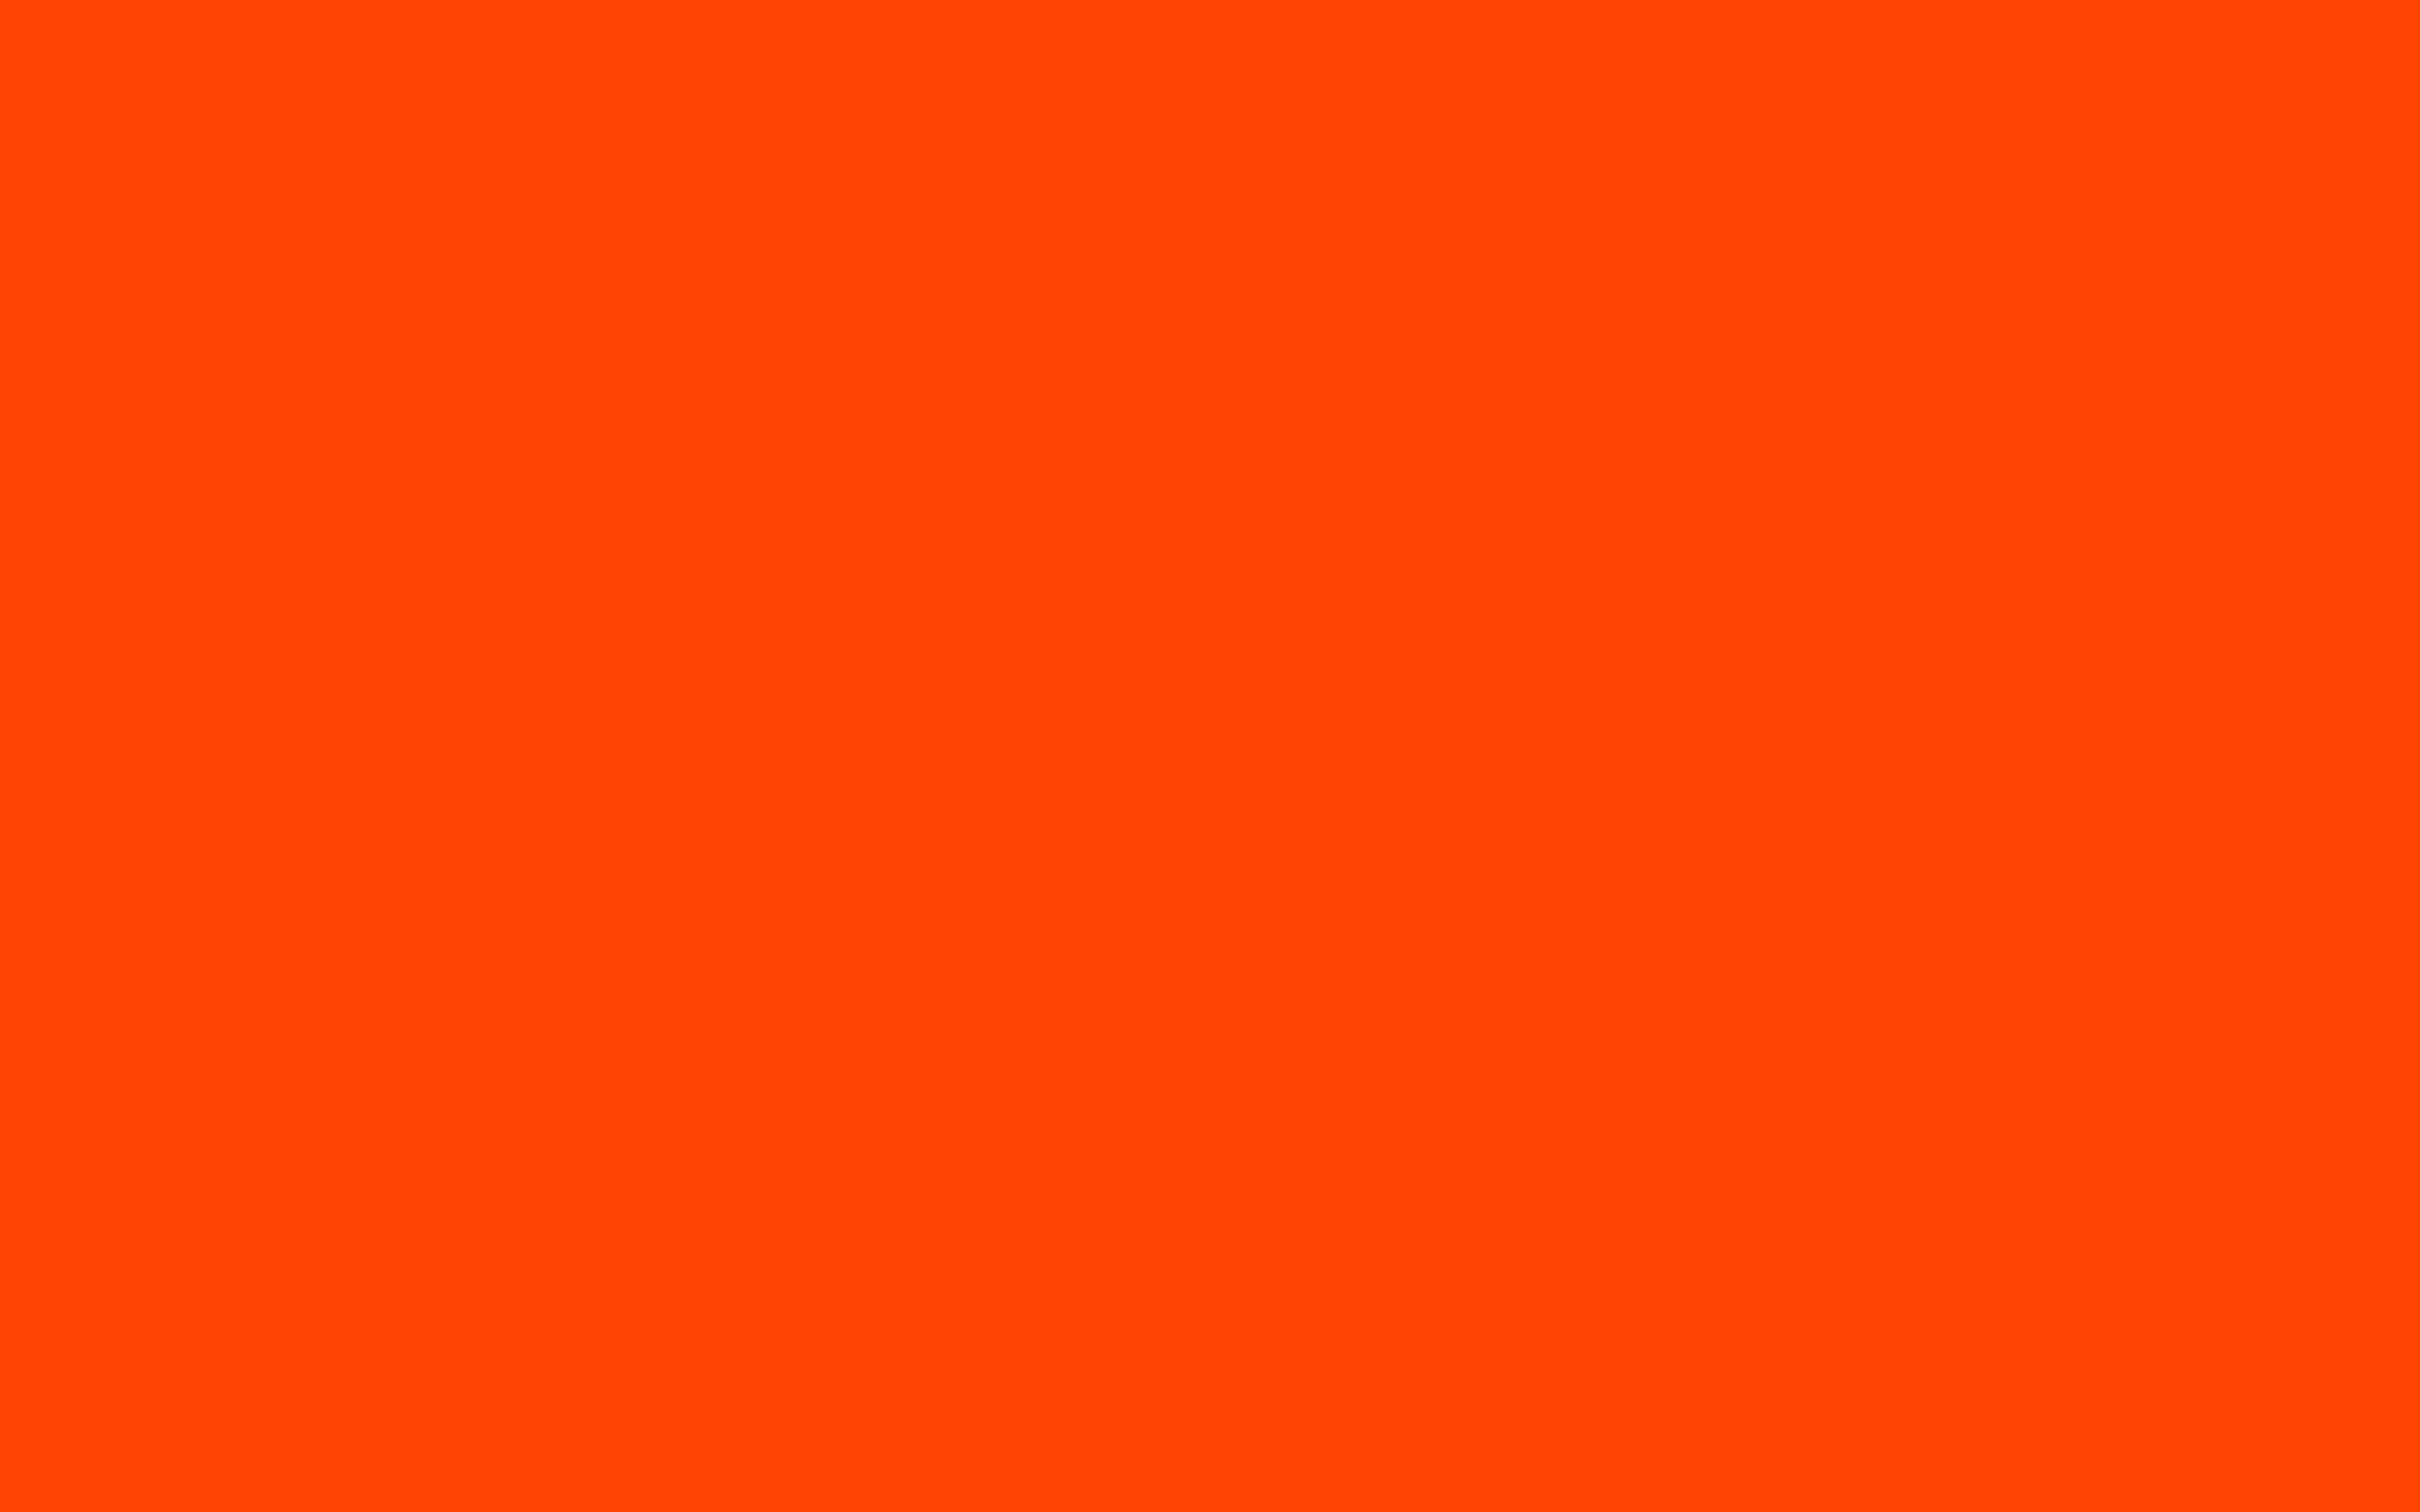 Nice Images Collection: Orange Red Desktop Wallpapers